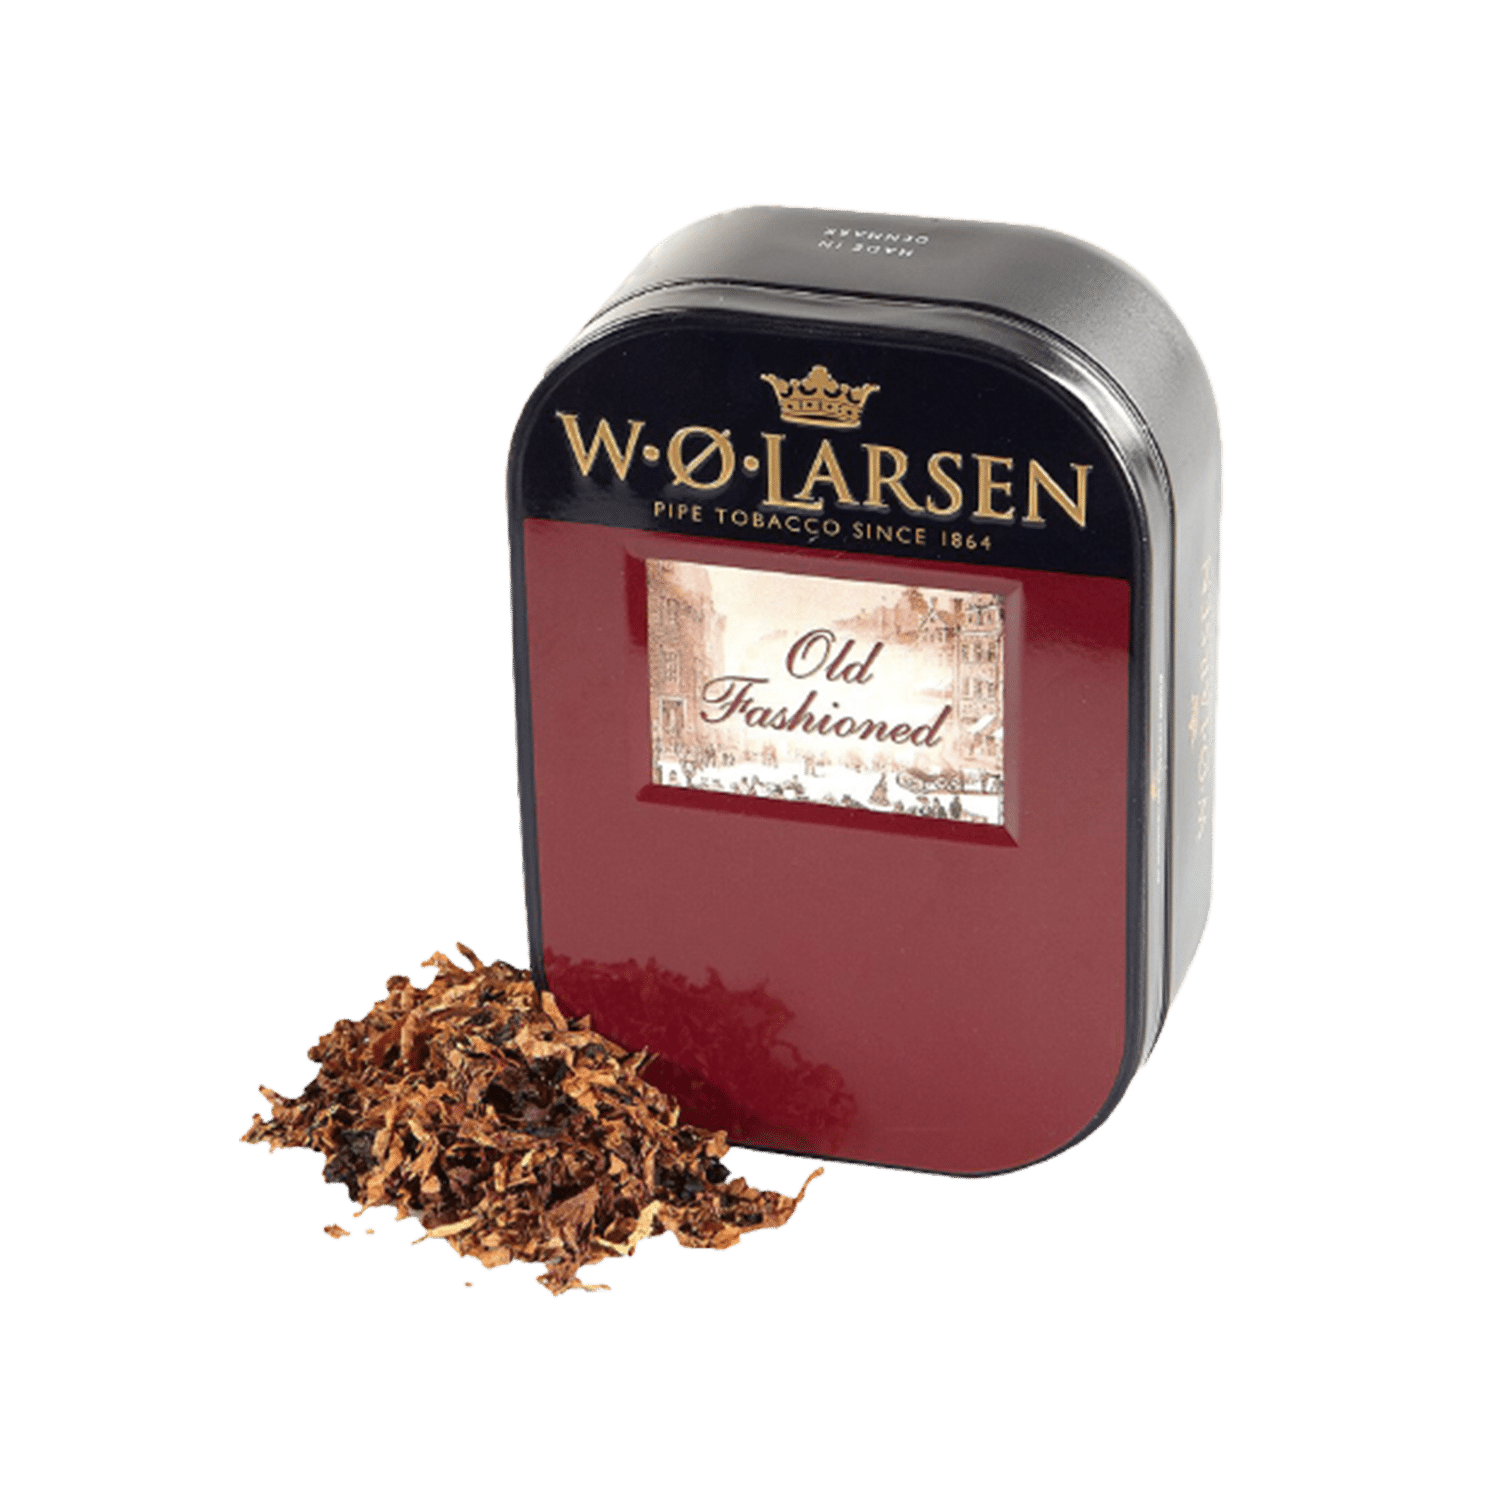 W.O. Larsen Old Fashioned 3.5oz Pipe Tobacco